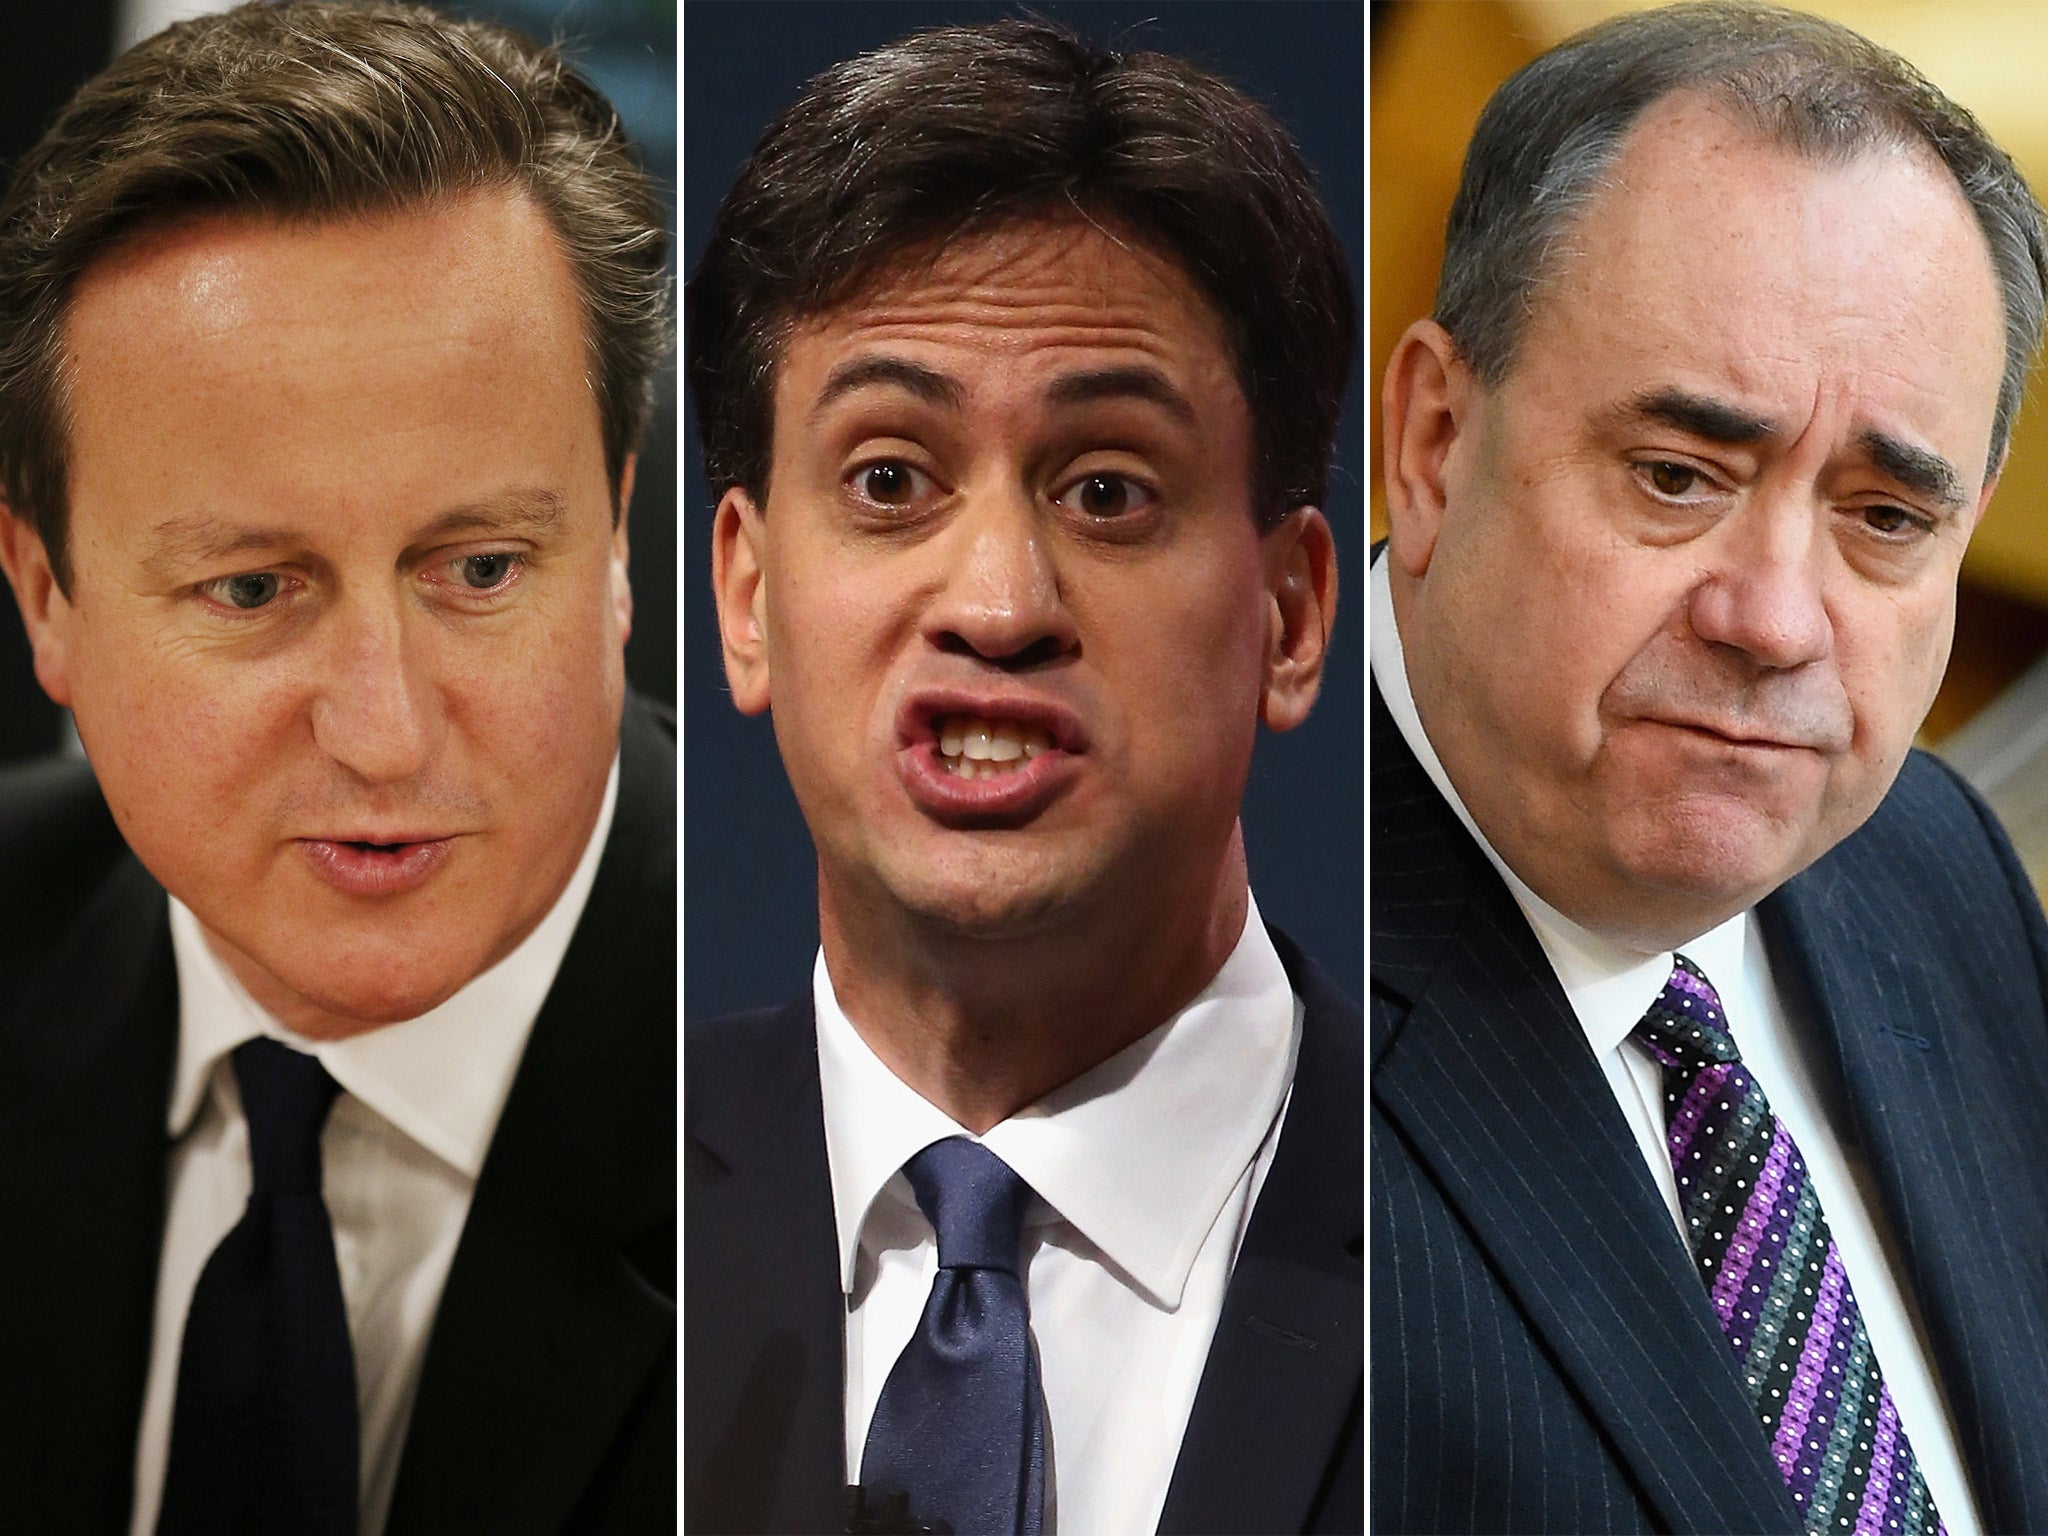 Prime Minister David Cameron; Labour leader Ed Miliband; Scottish First Minster Alex Salmond